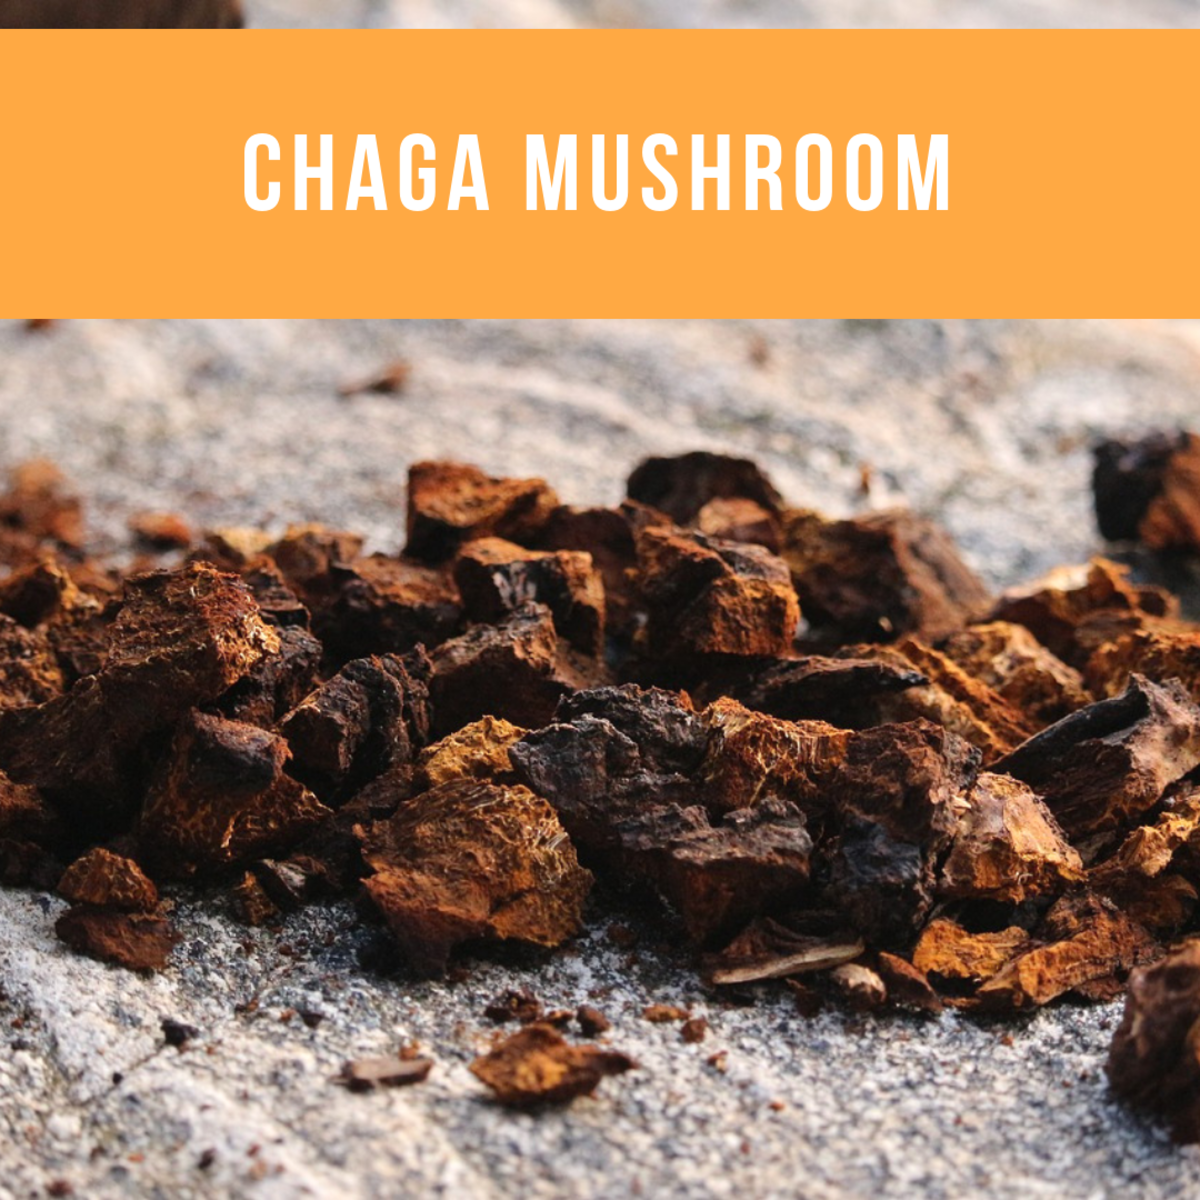 The chaga mushroom and its beautiful orange color